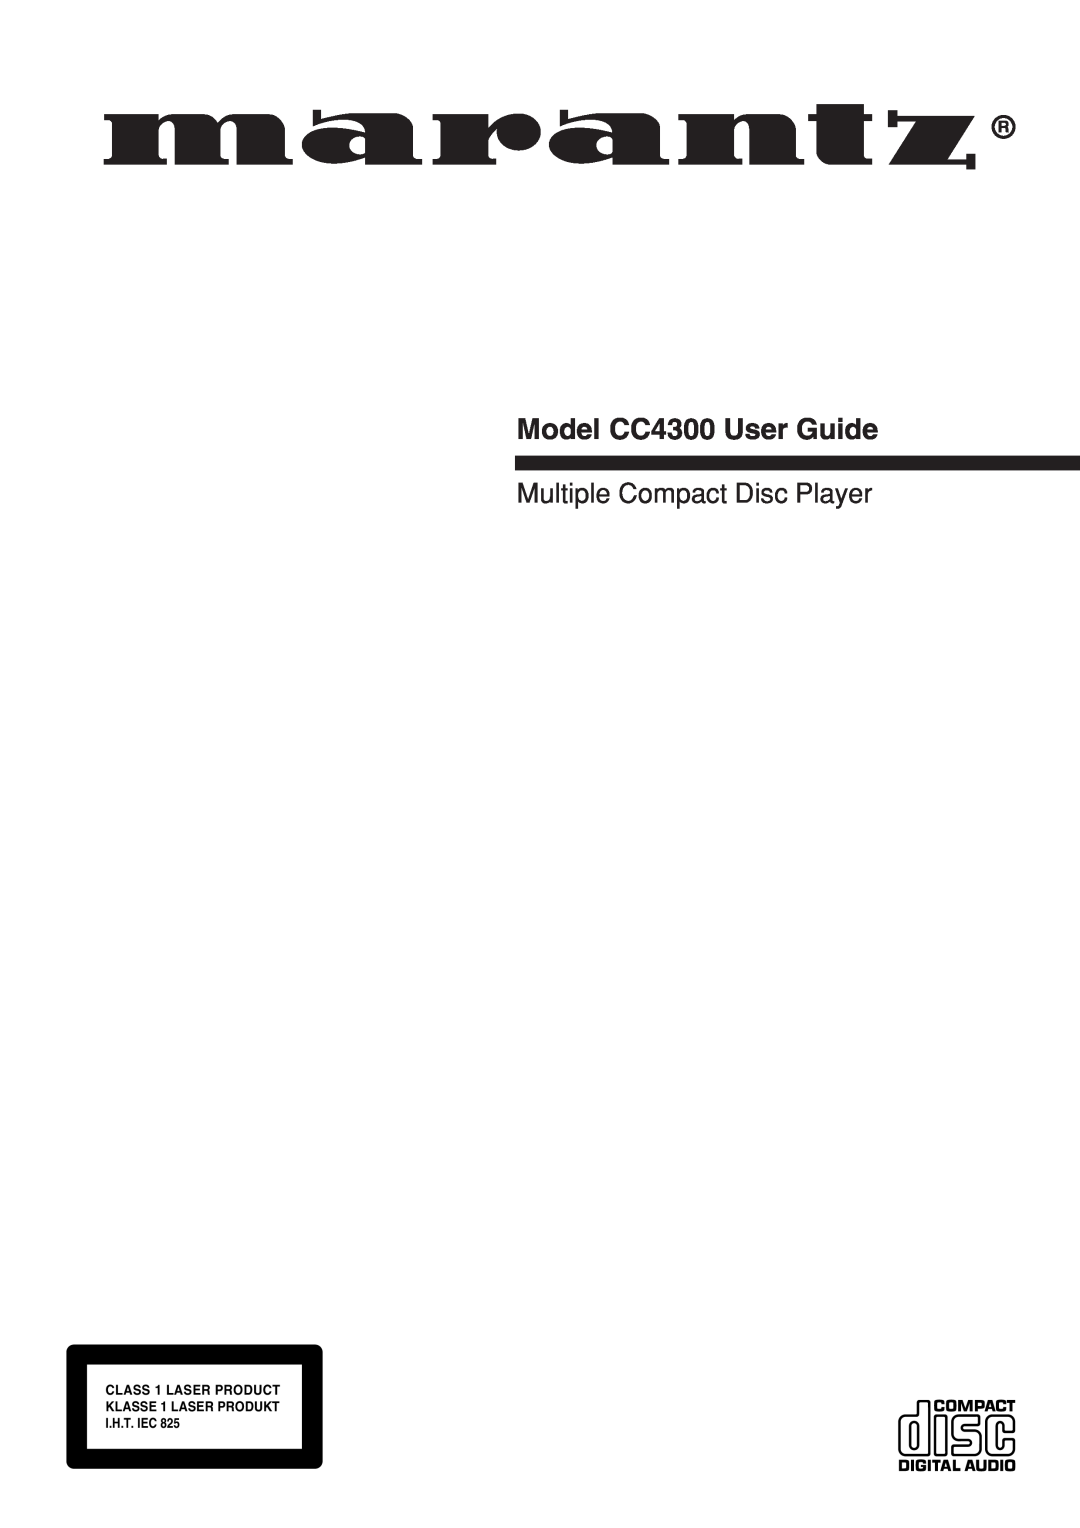 Marantz CC4300N manual Model CC4300 User Guide, Multiple Compact Disc Player, CLASS 1 LASER PRODUCT KLASSE 1 LASER PRODUKT 